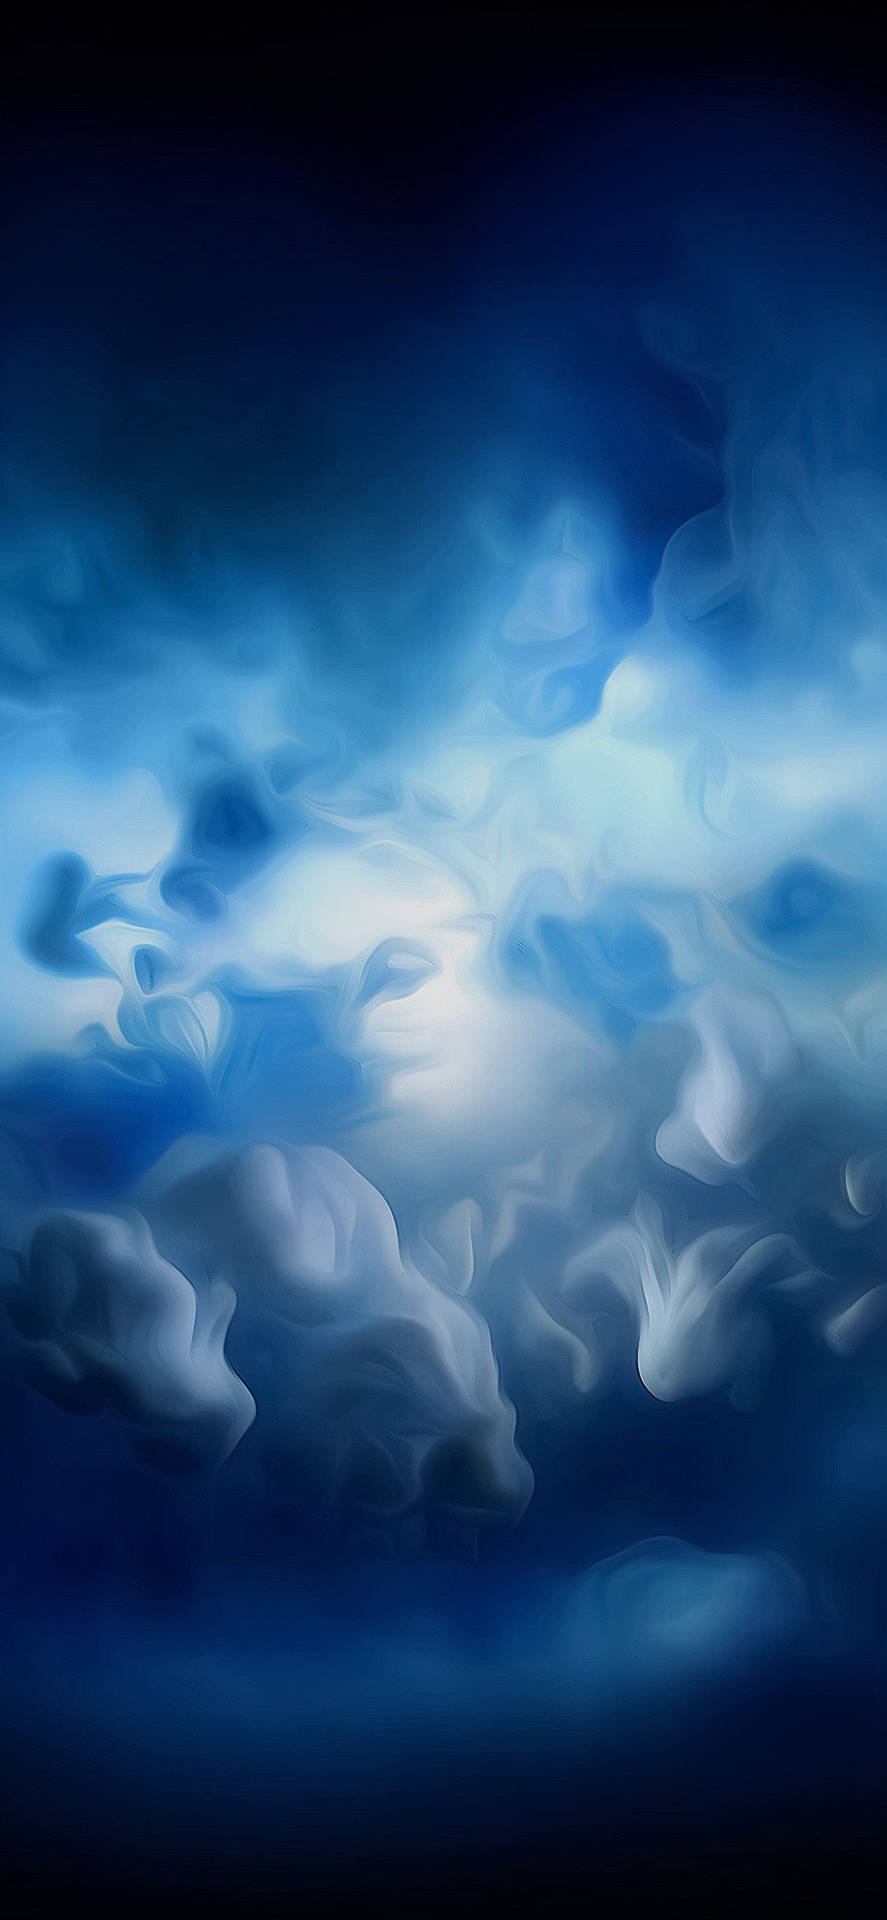 Dynamic Blue Smoke Clouds Background